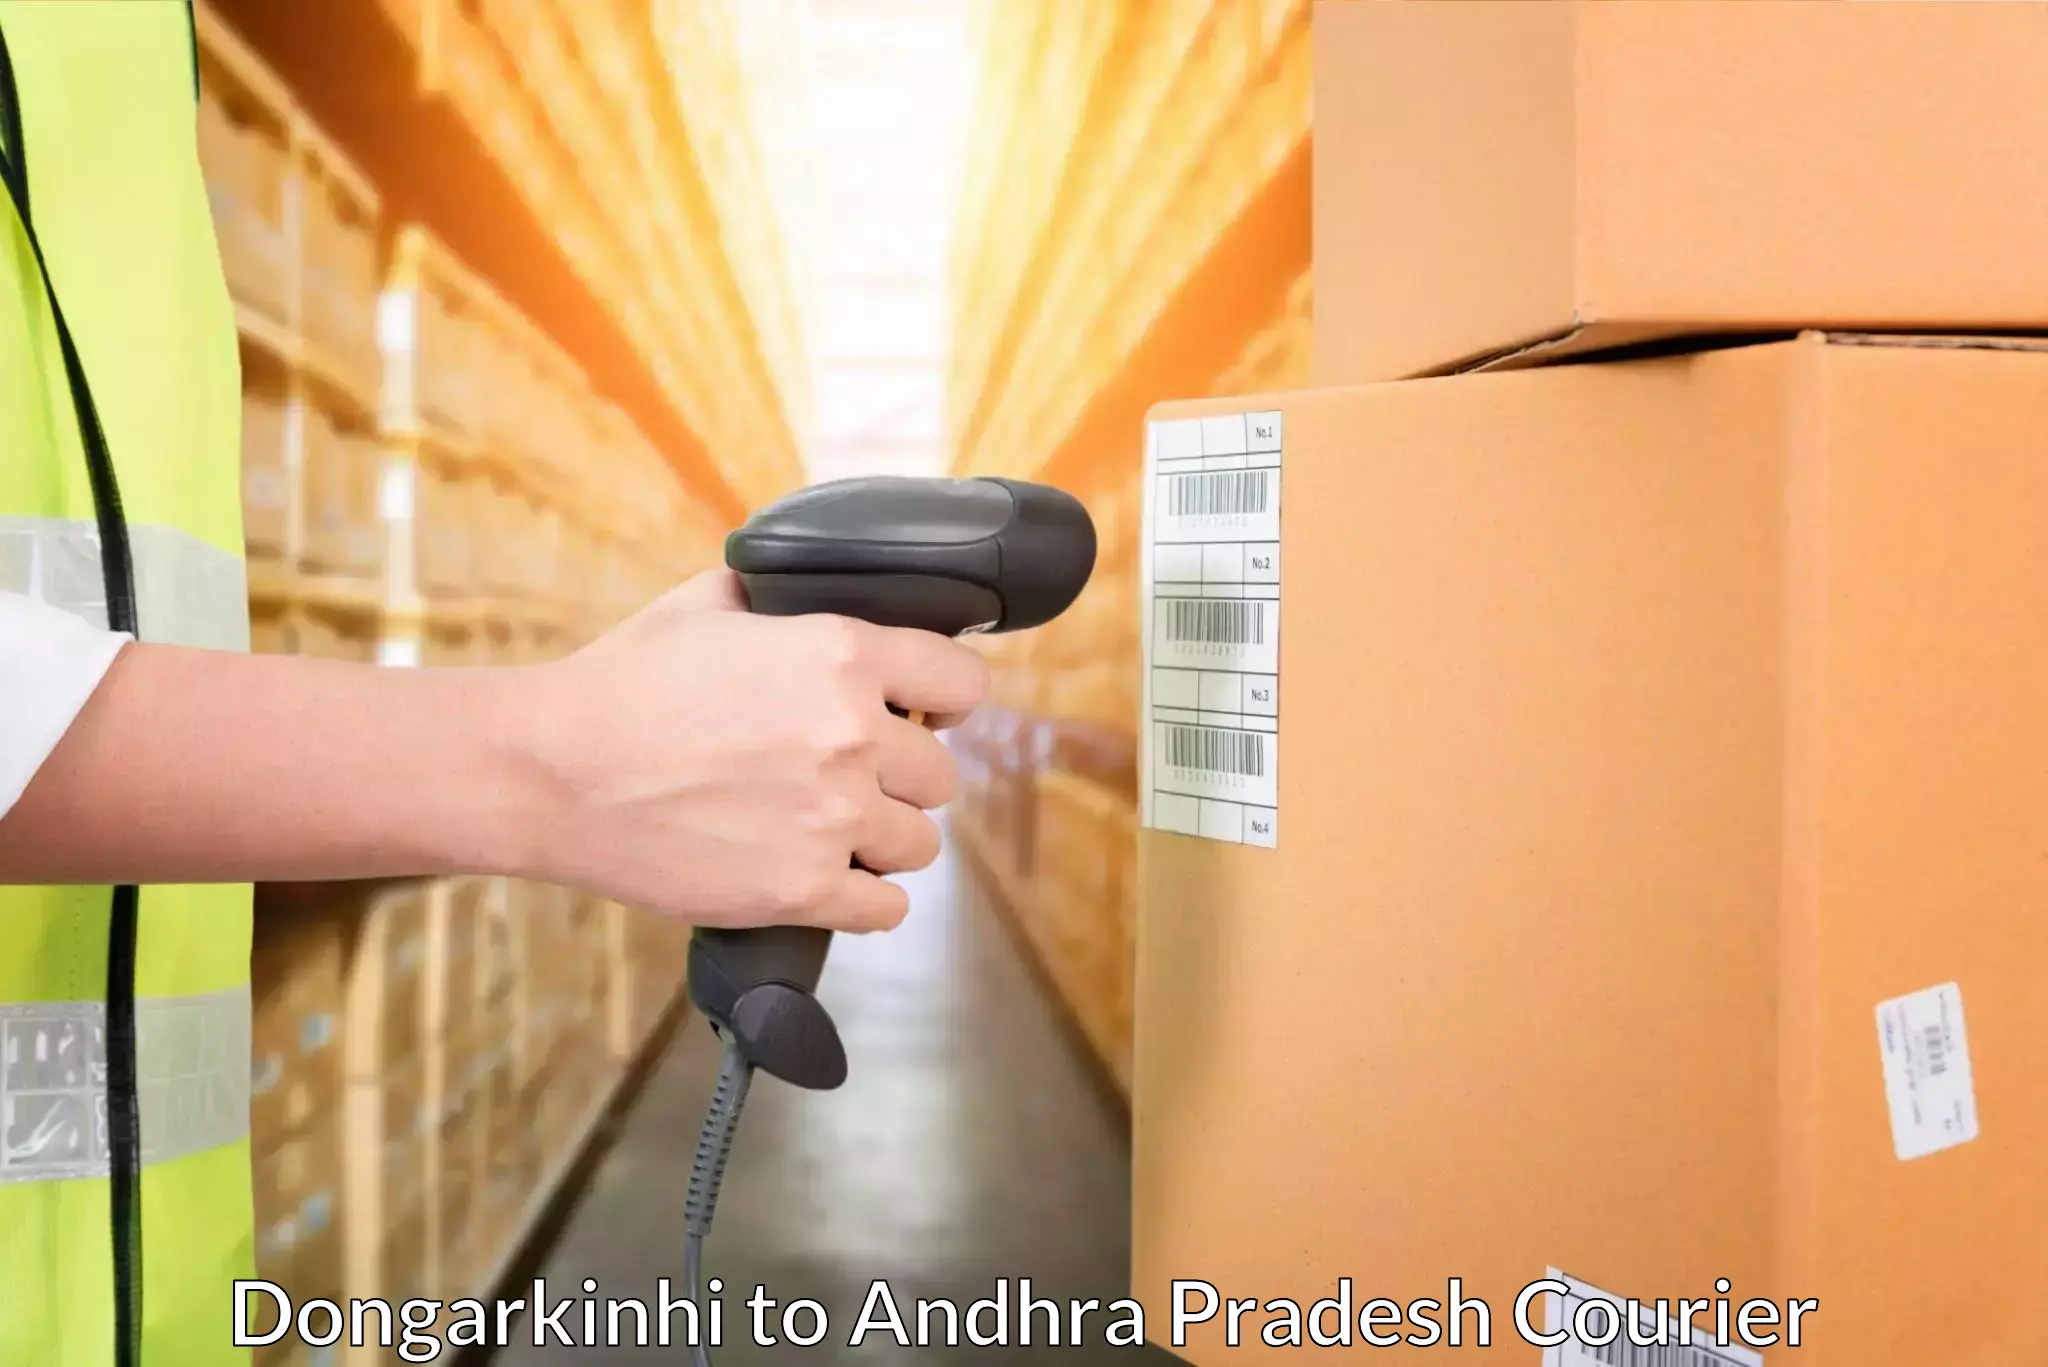 Flexible delivery scheduling in Dongarkinhi to Srikakulam